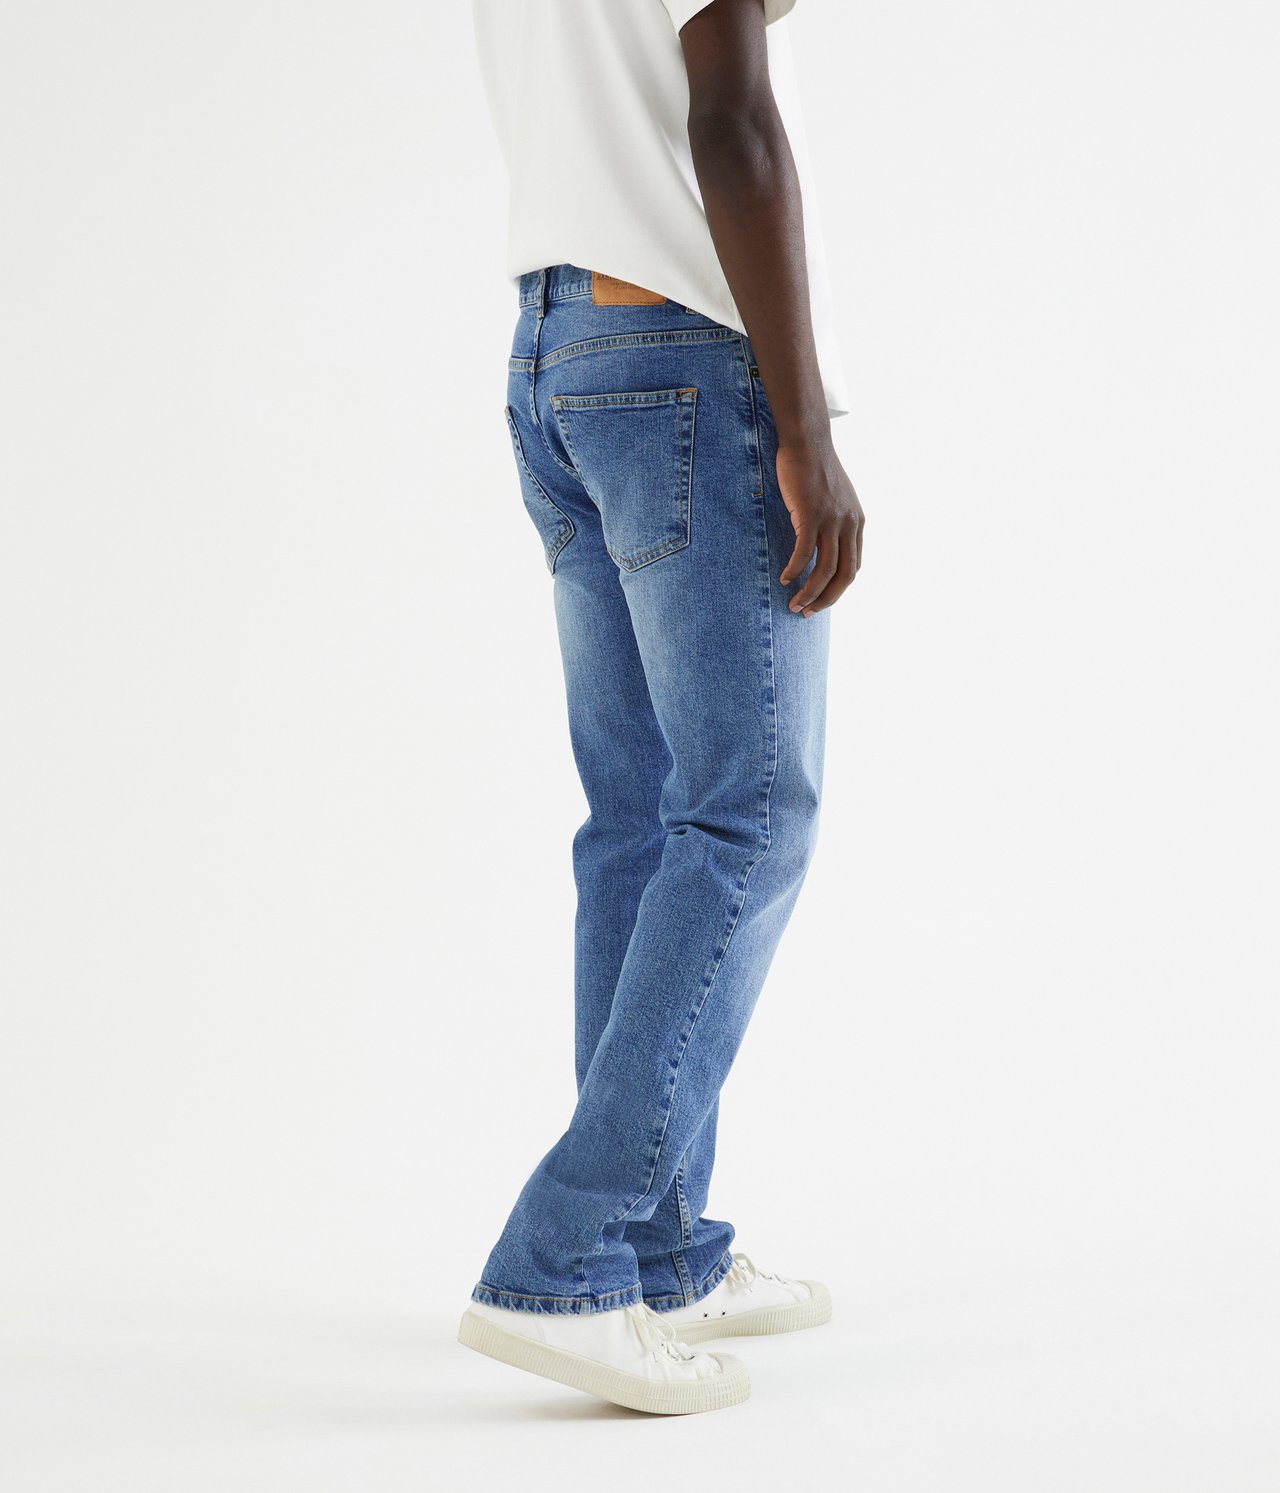 Hank regular jeans - Ljus denim - 185cm / Storlek: 33/34 - 5